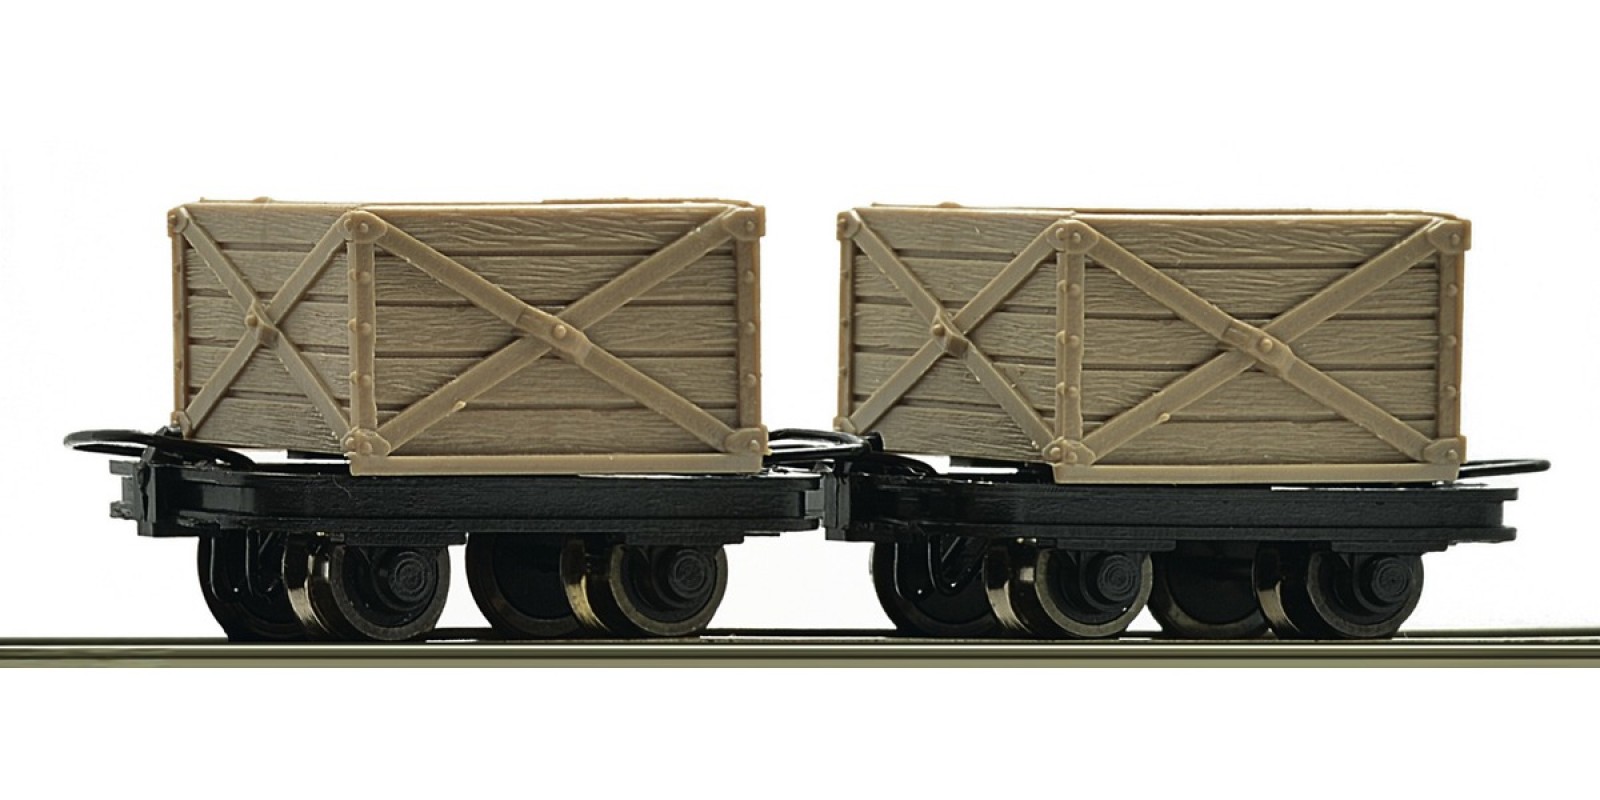 RO34603 2-unit crate truck set